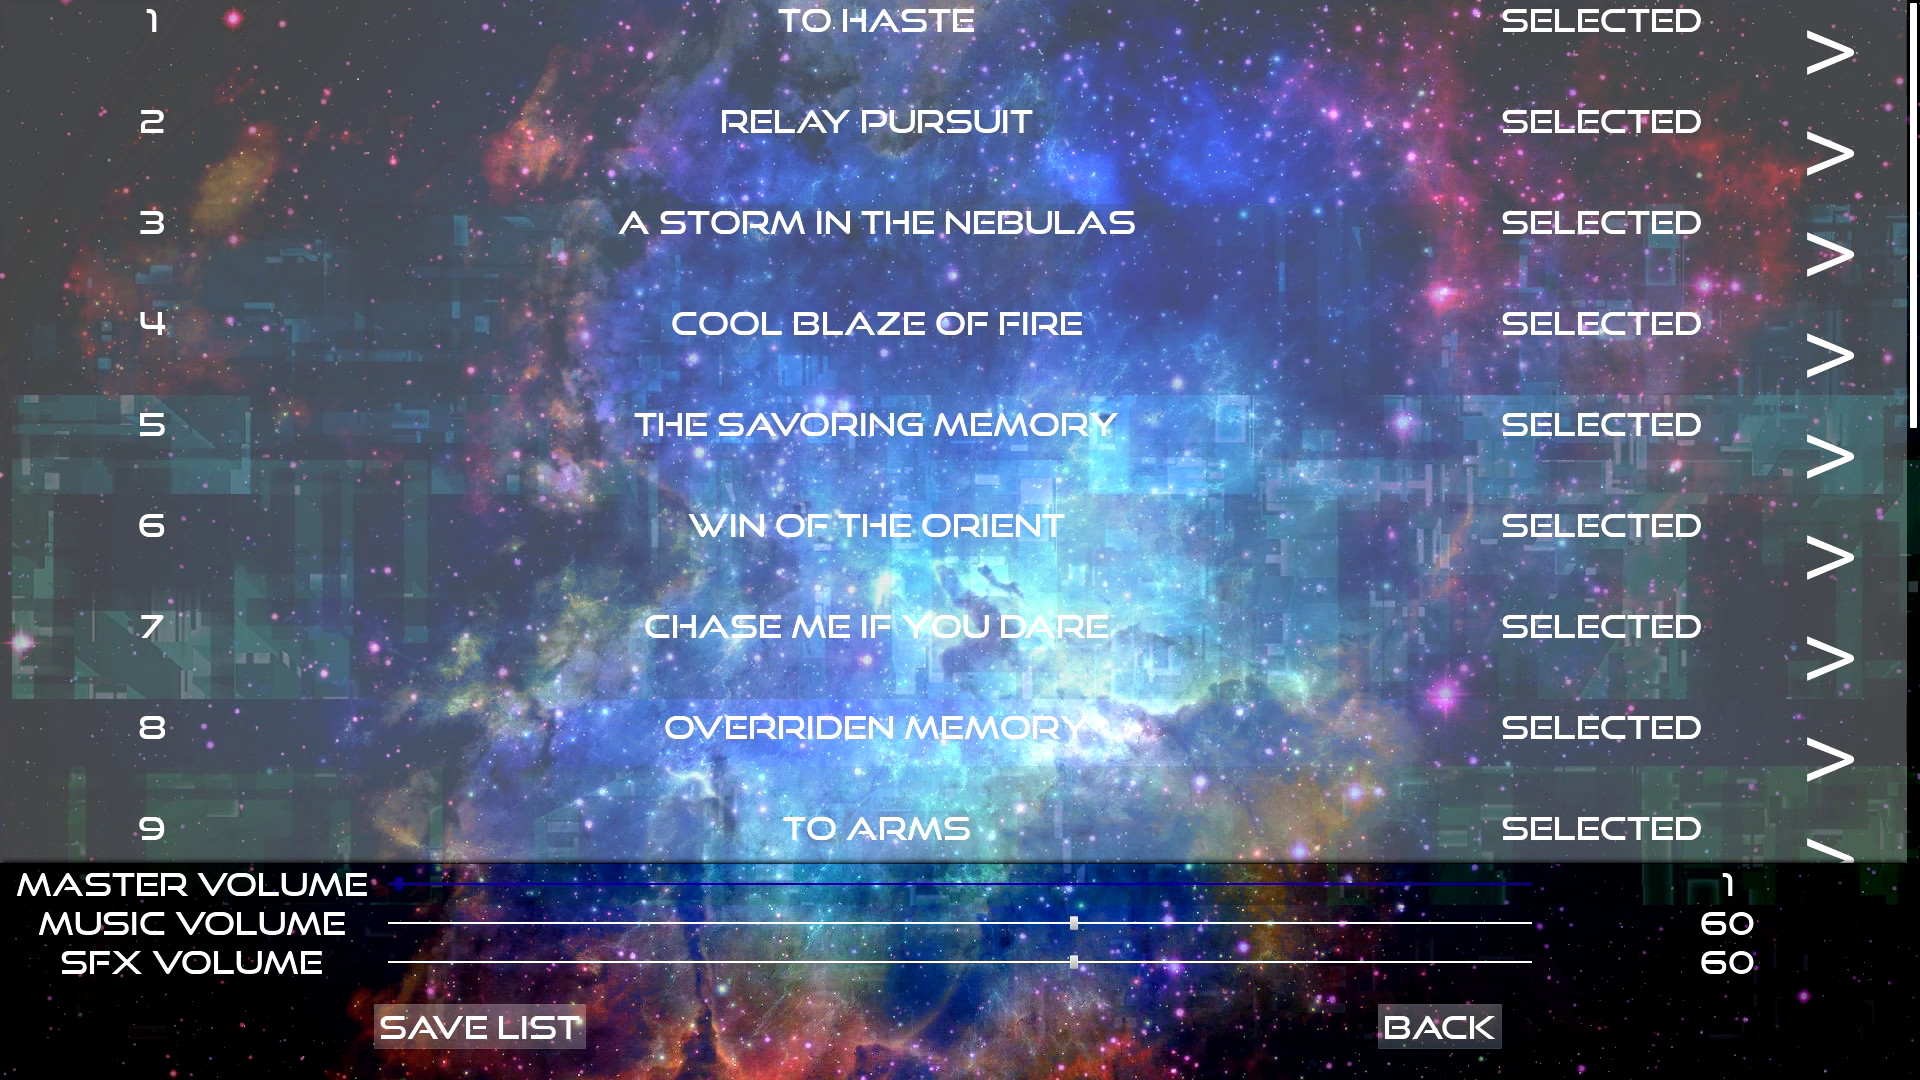 Nebulas Lasso Free Download